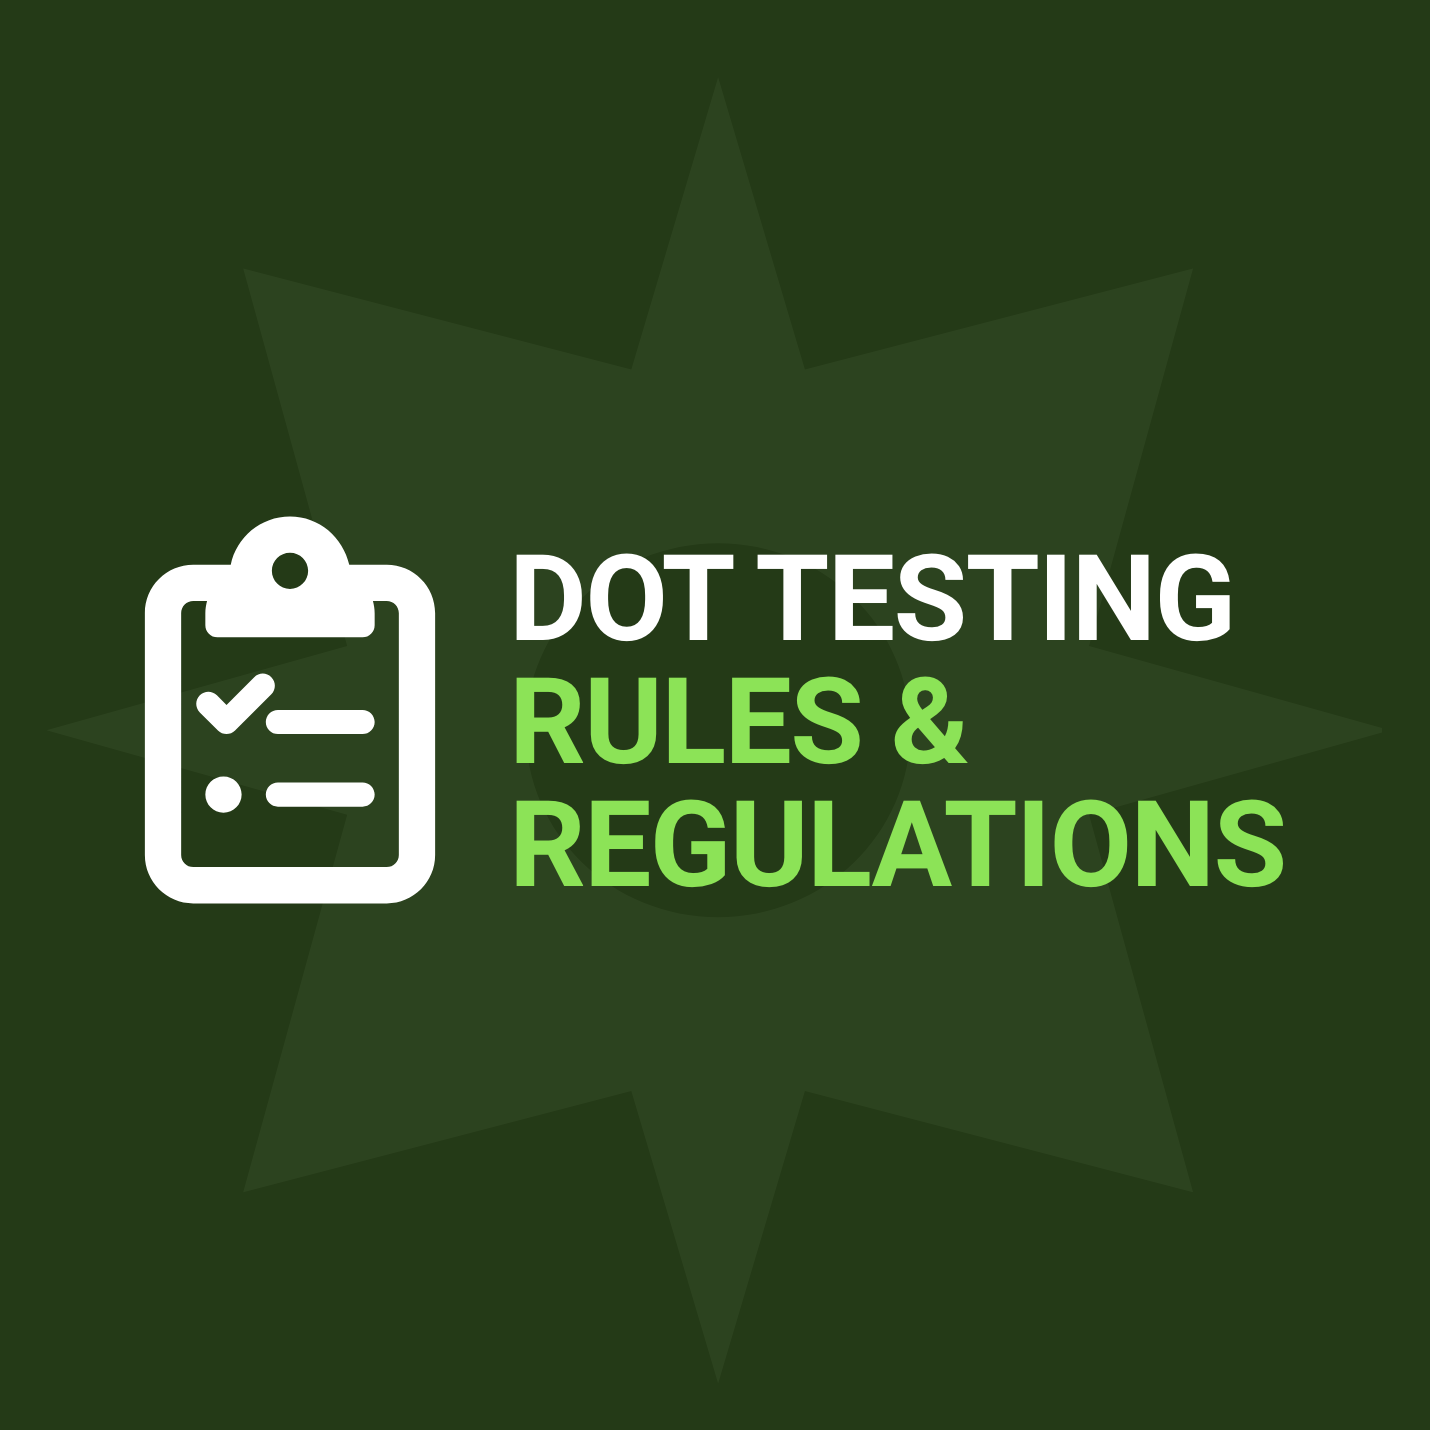 DOT Drug Testing Rules and Regulations